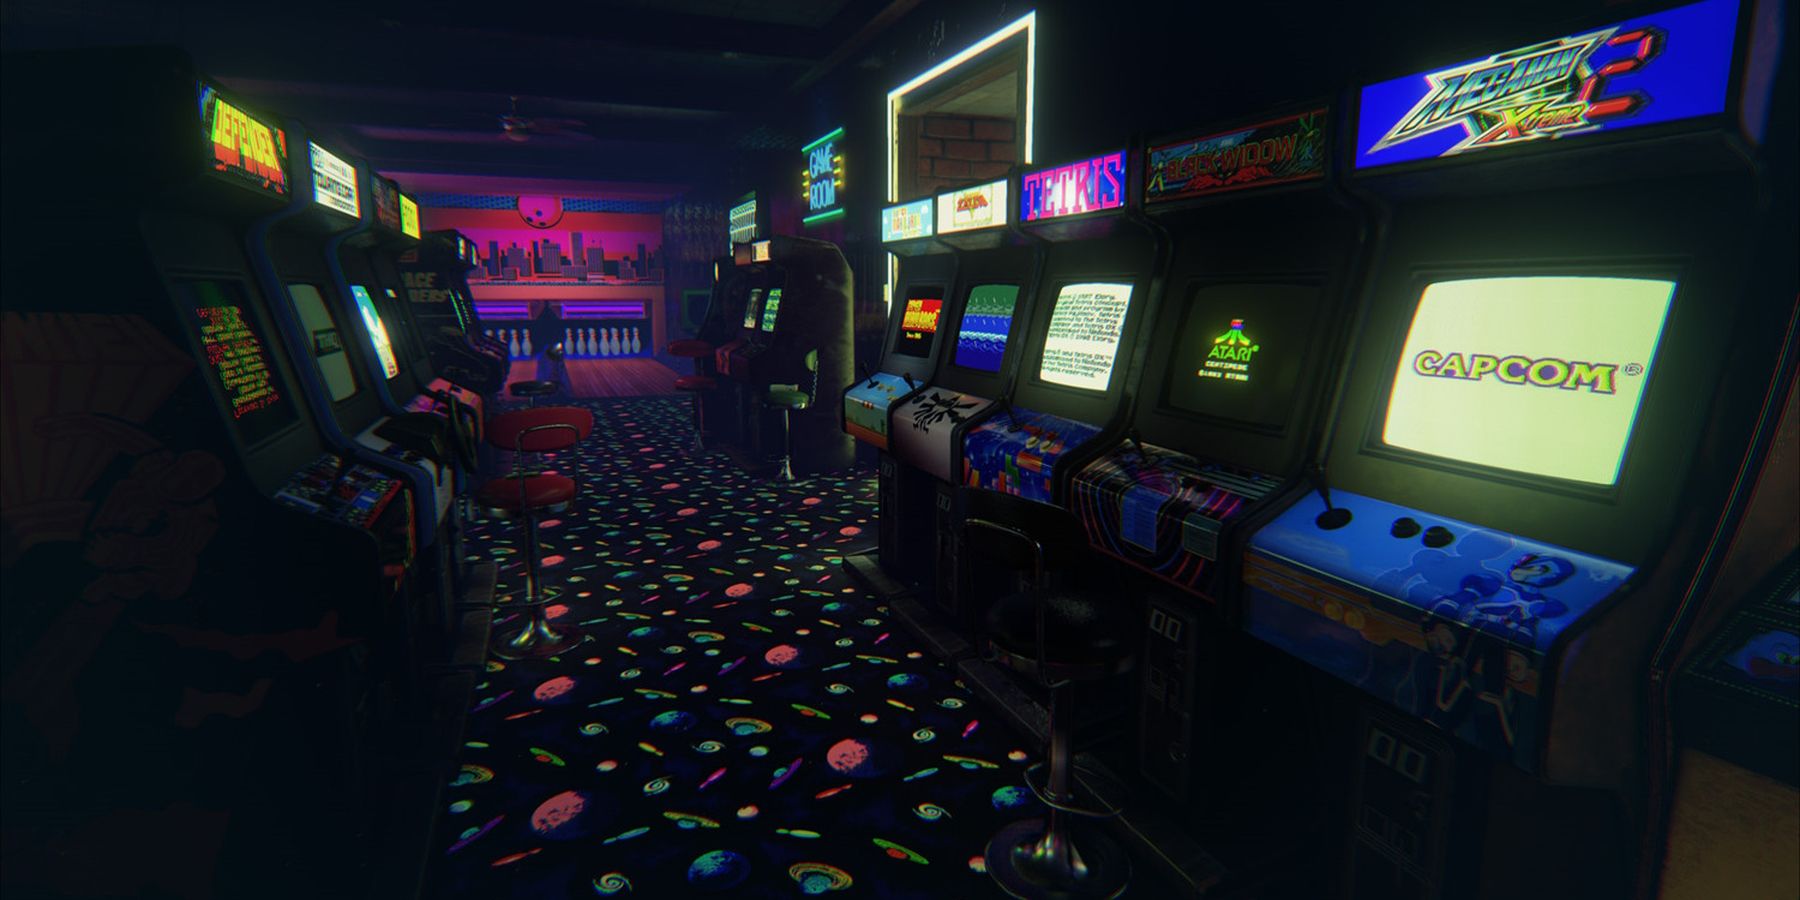 Gamer Makes Nostalgic Pixel Art of Arcade Featuring Games Like Pac-Man